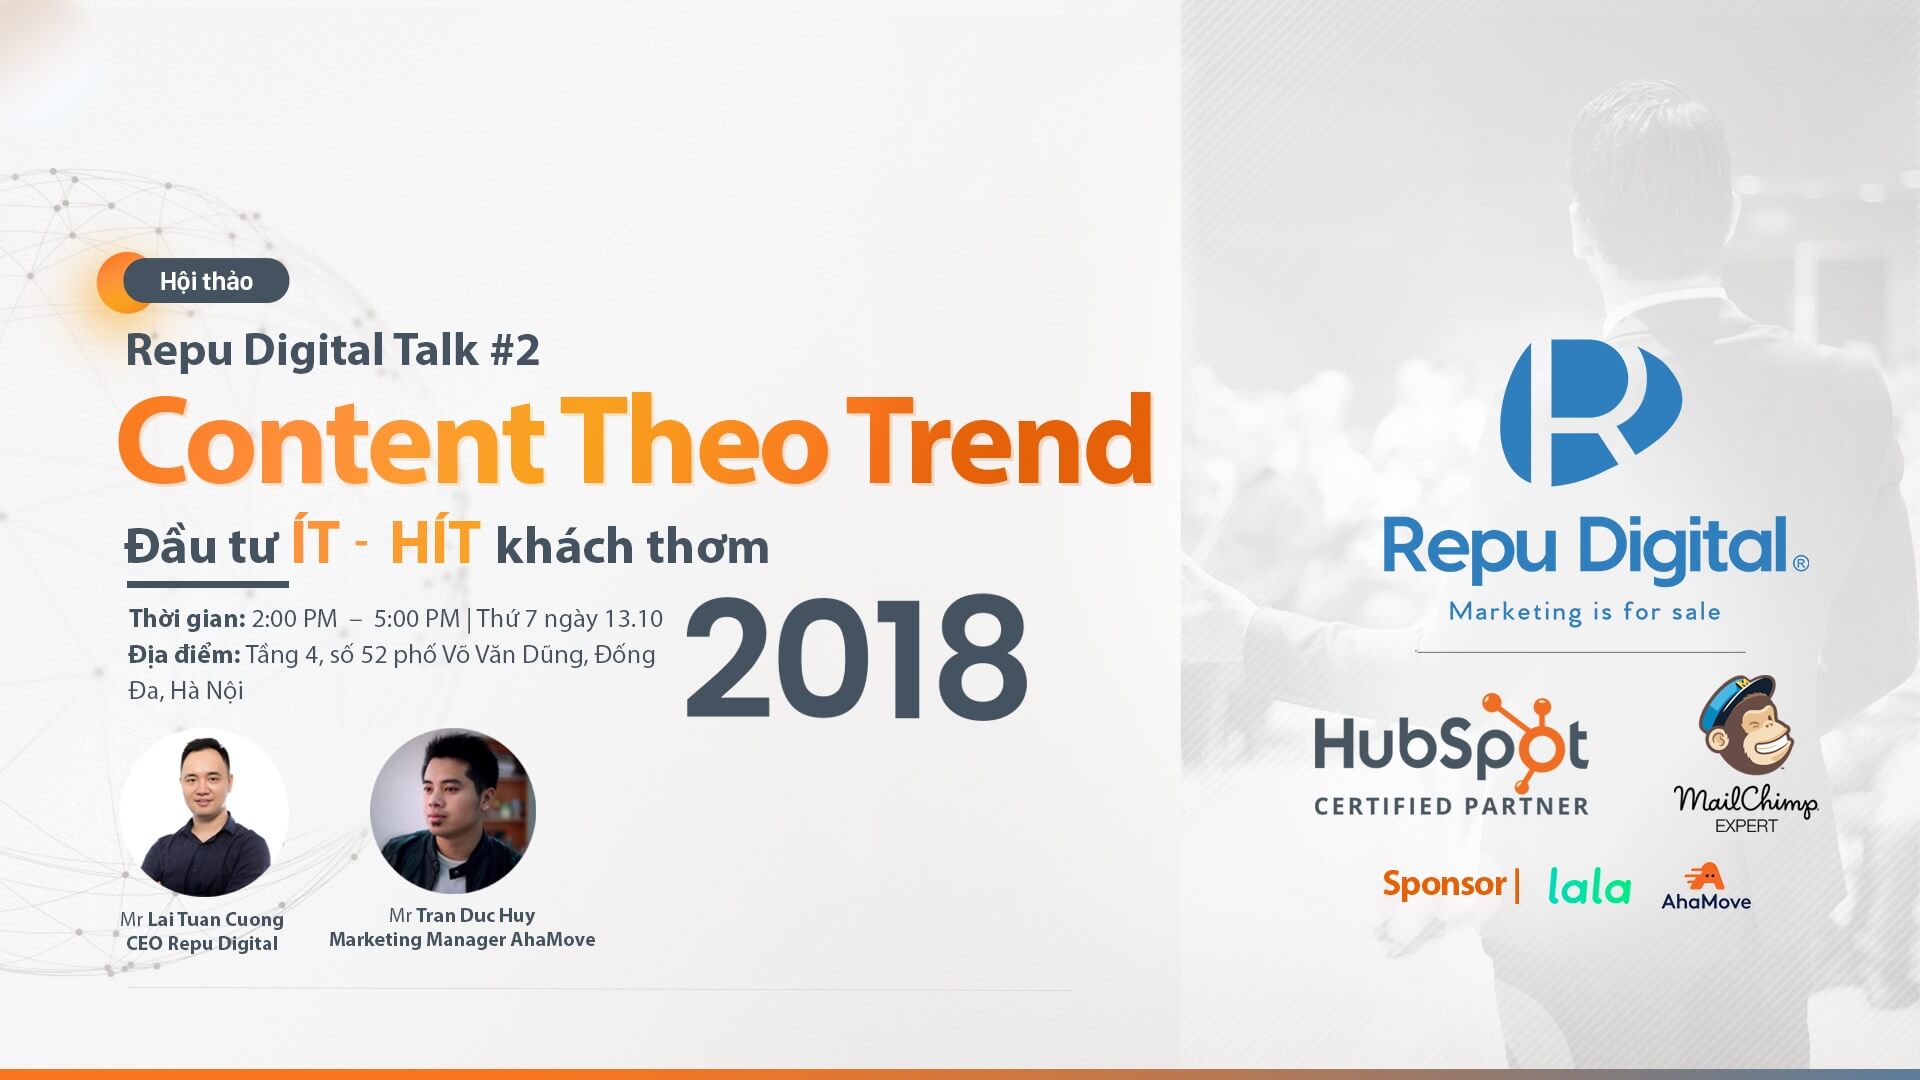 Repu Digital Talk #2 – Content Theo Trend